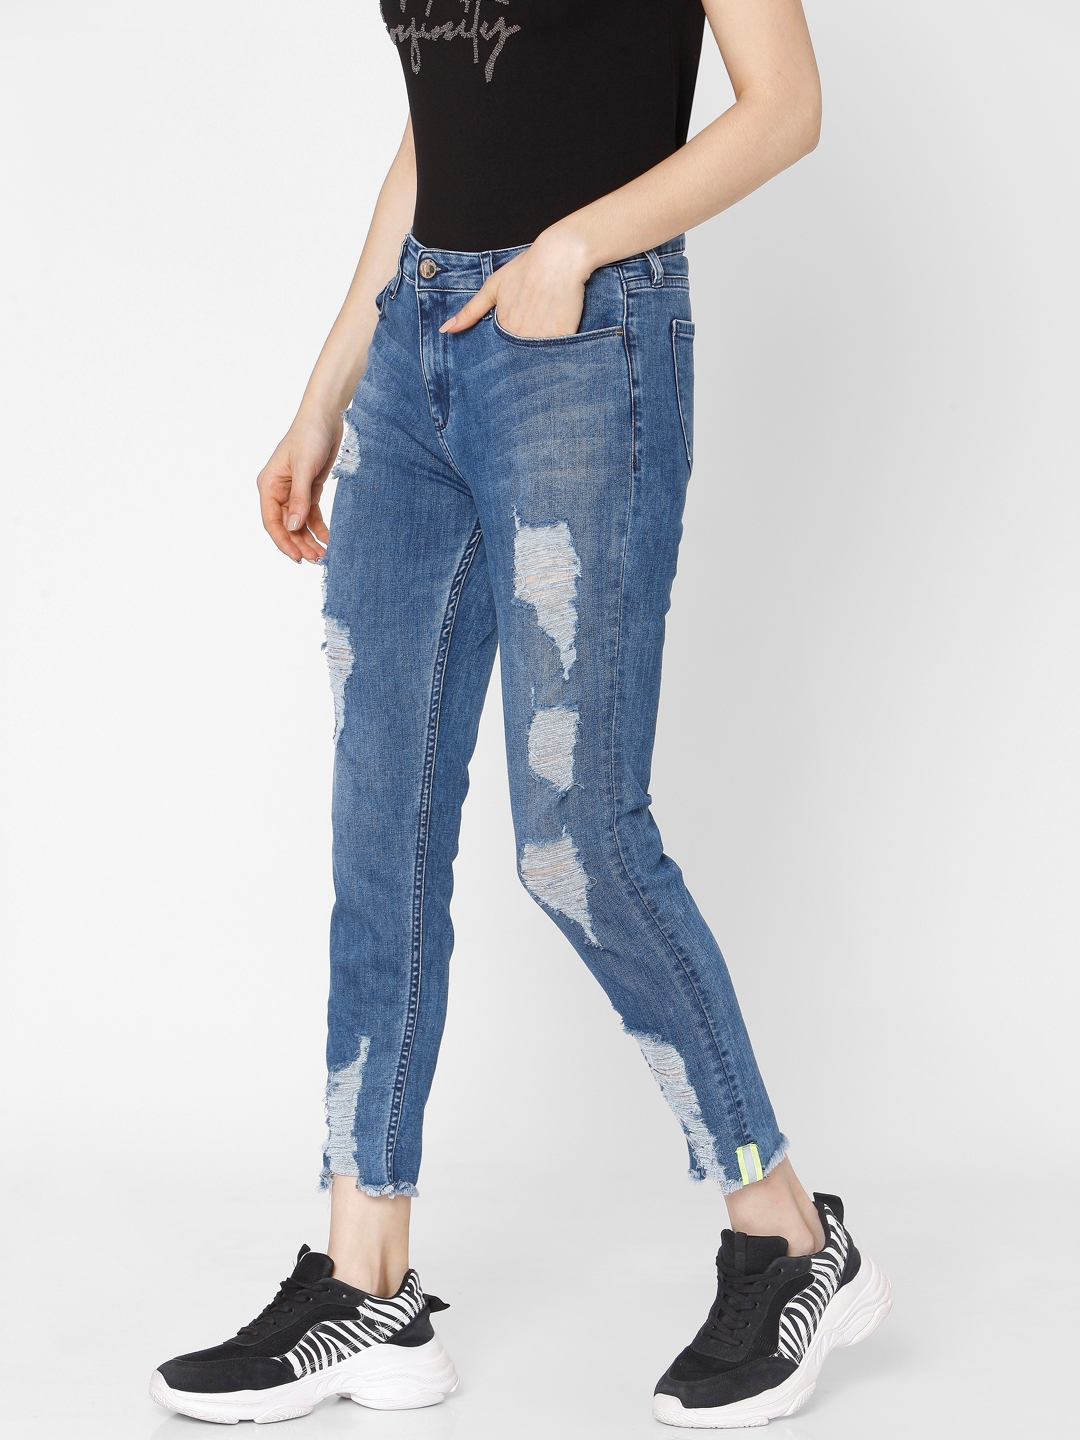 spykar | Women's Blue Cotton Ripped Skinny Jeans 2